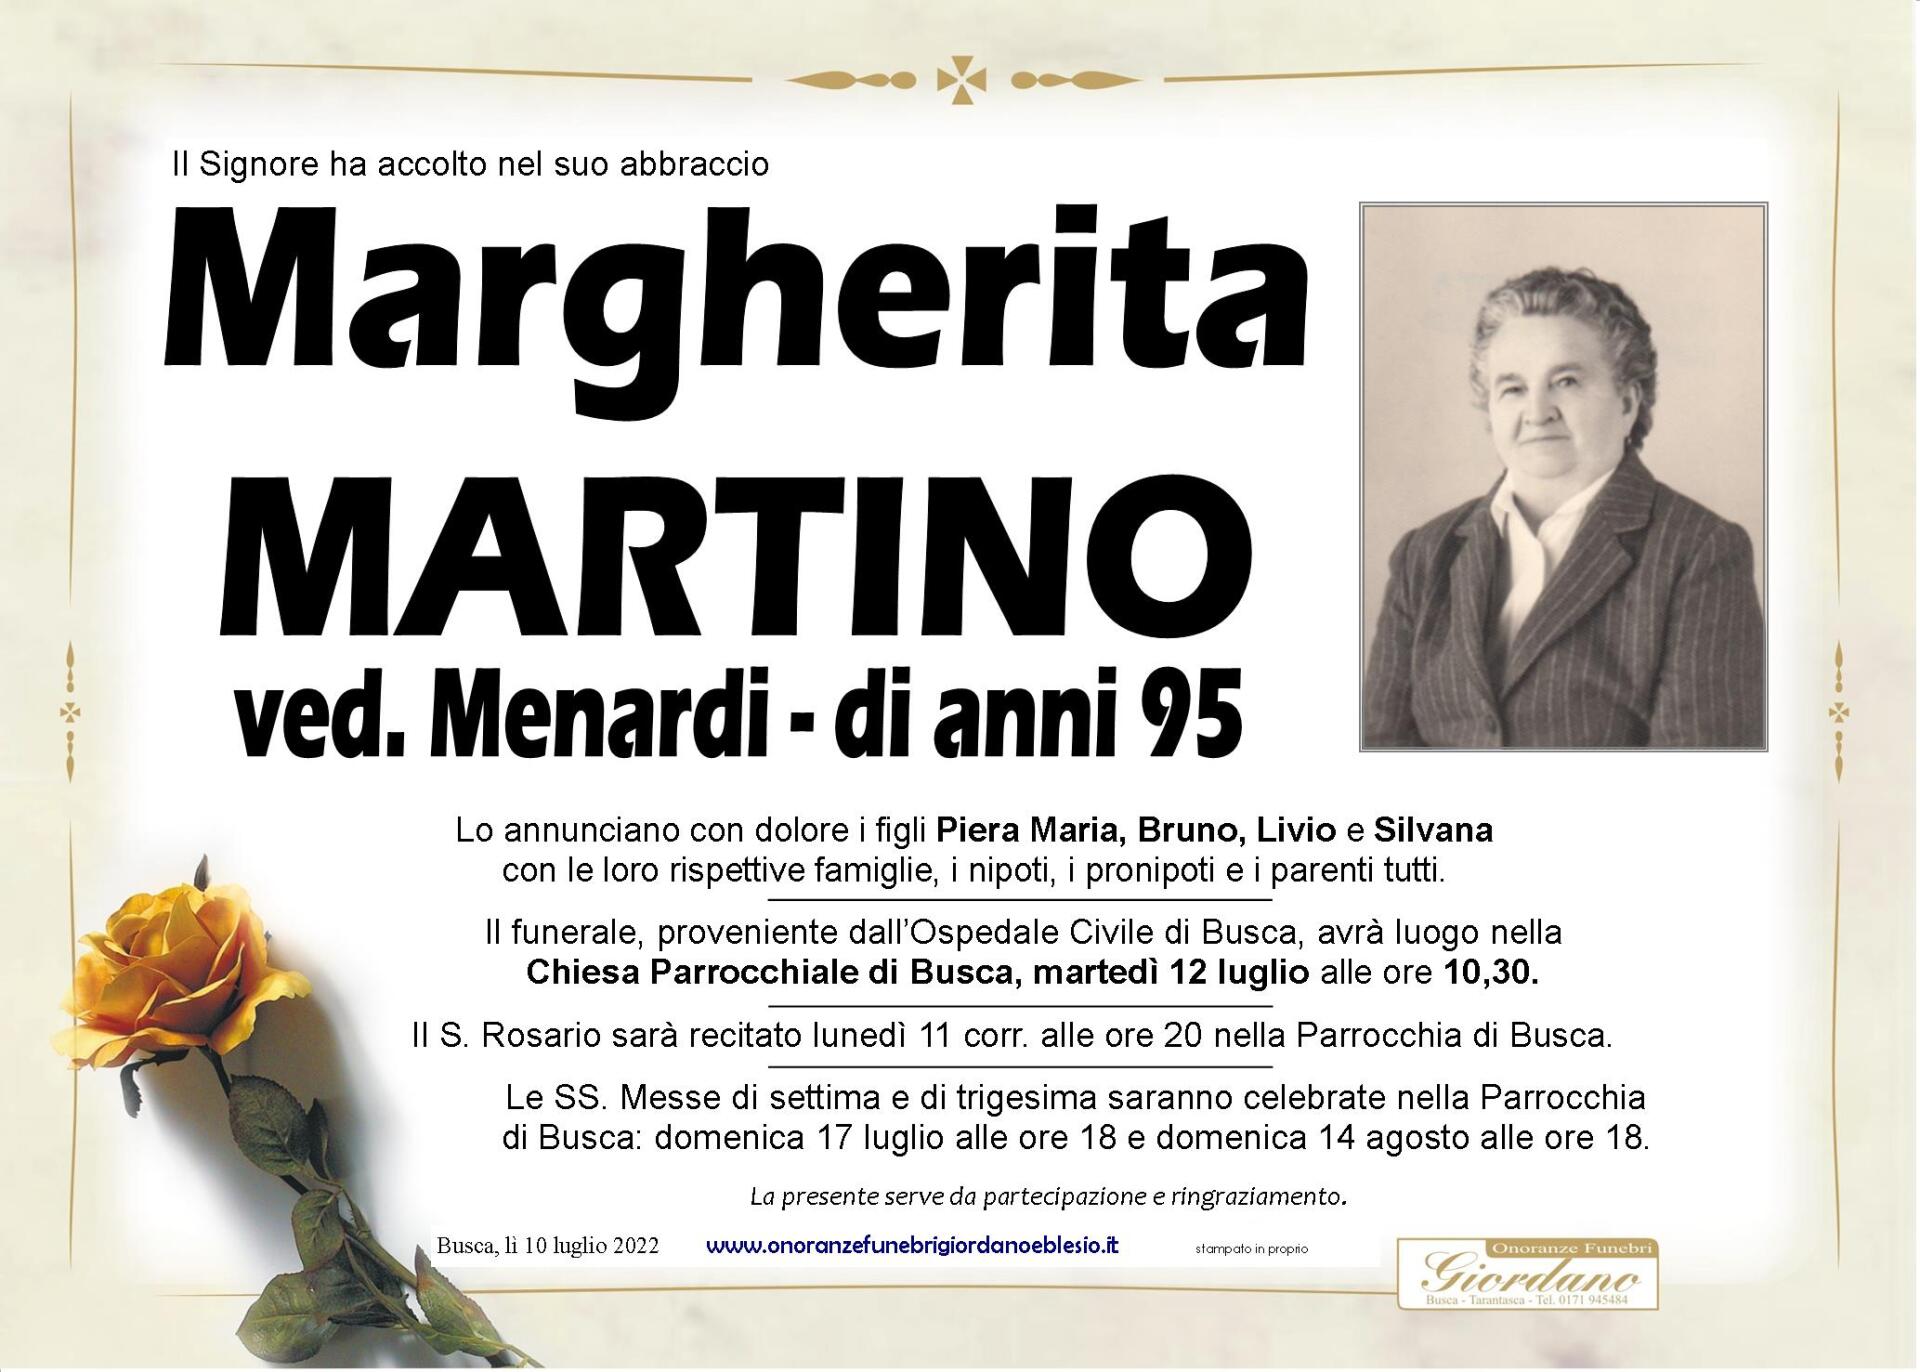 necrologio MARTINO Margherita ved. Menardi